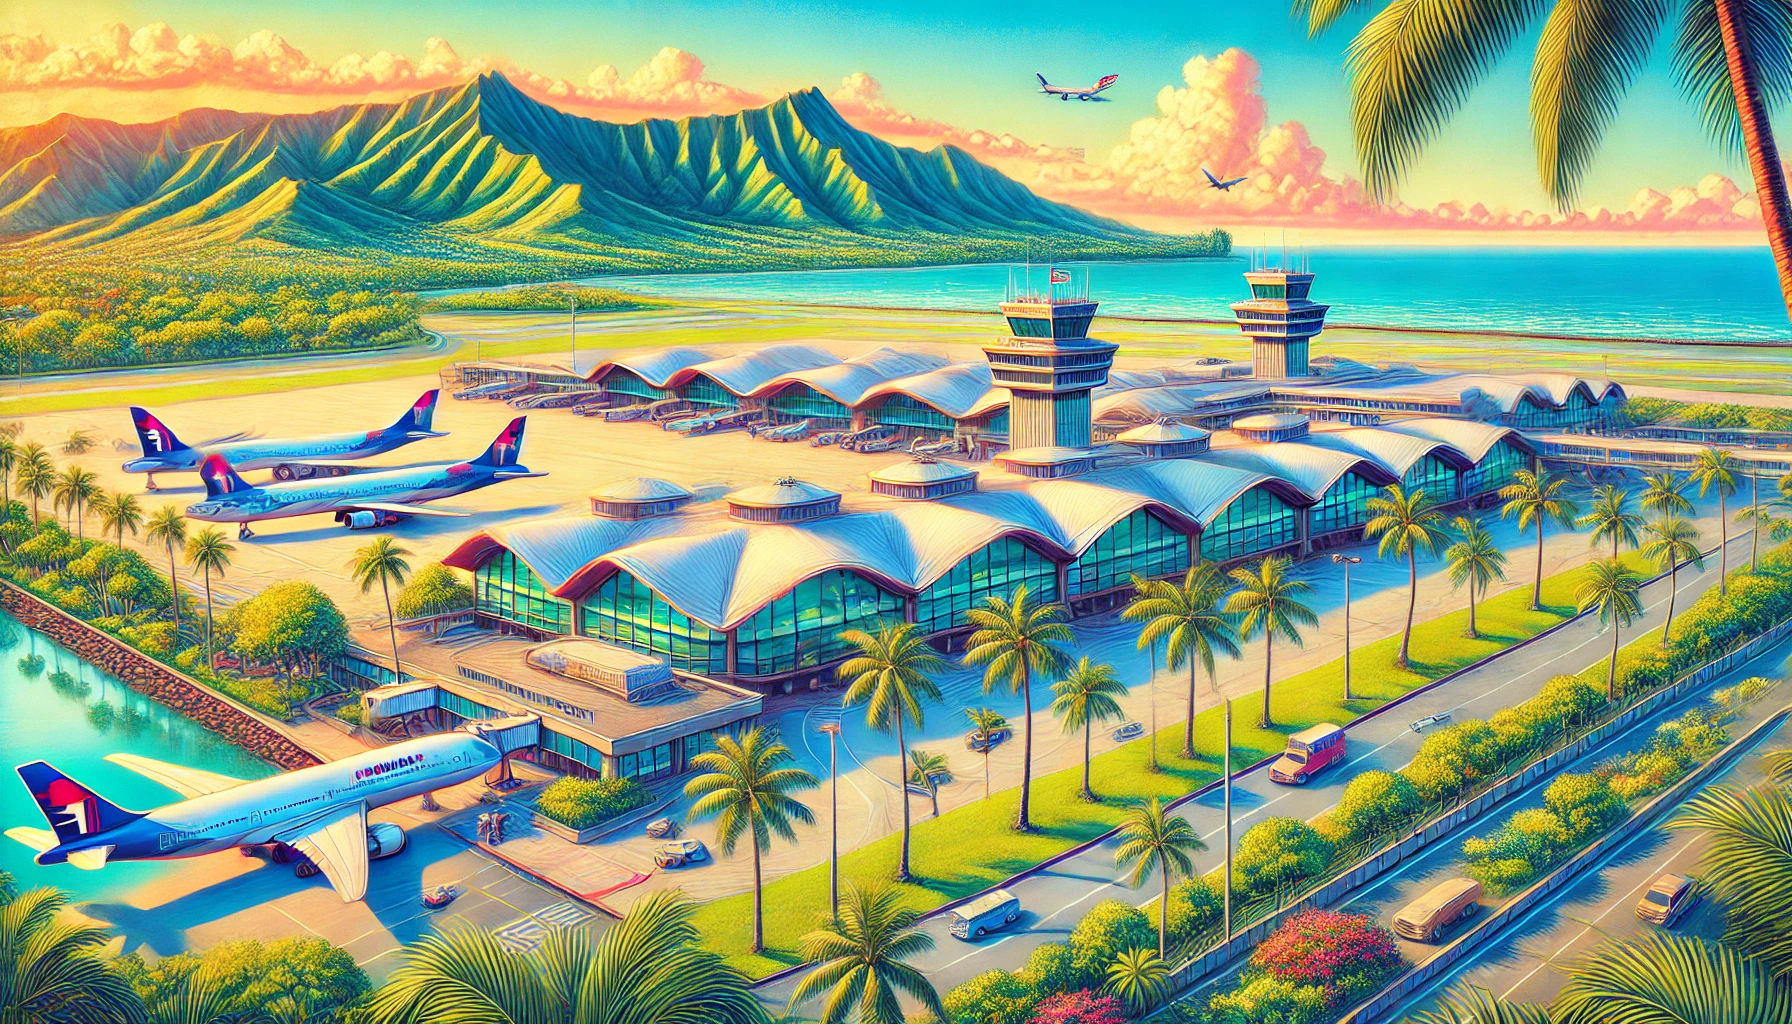 Honolulu International Airport: The Gateway to Paradise.